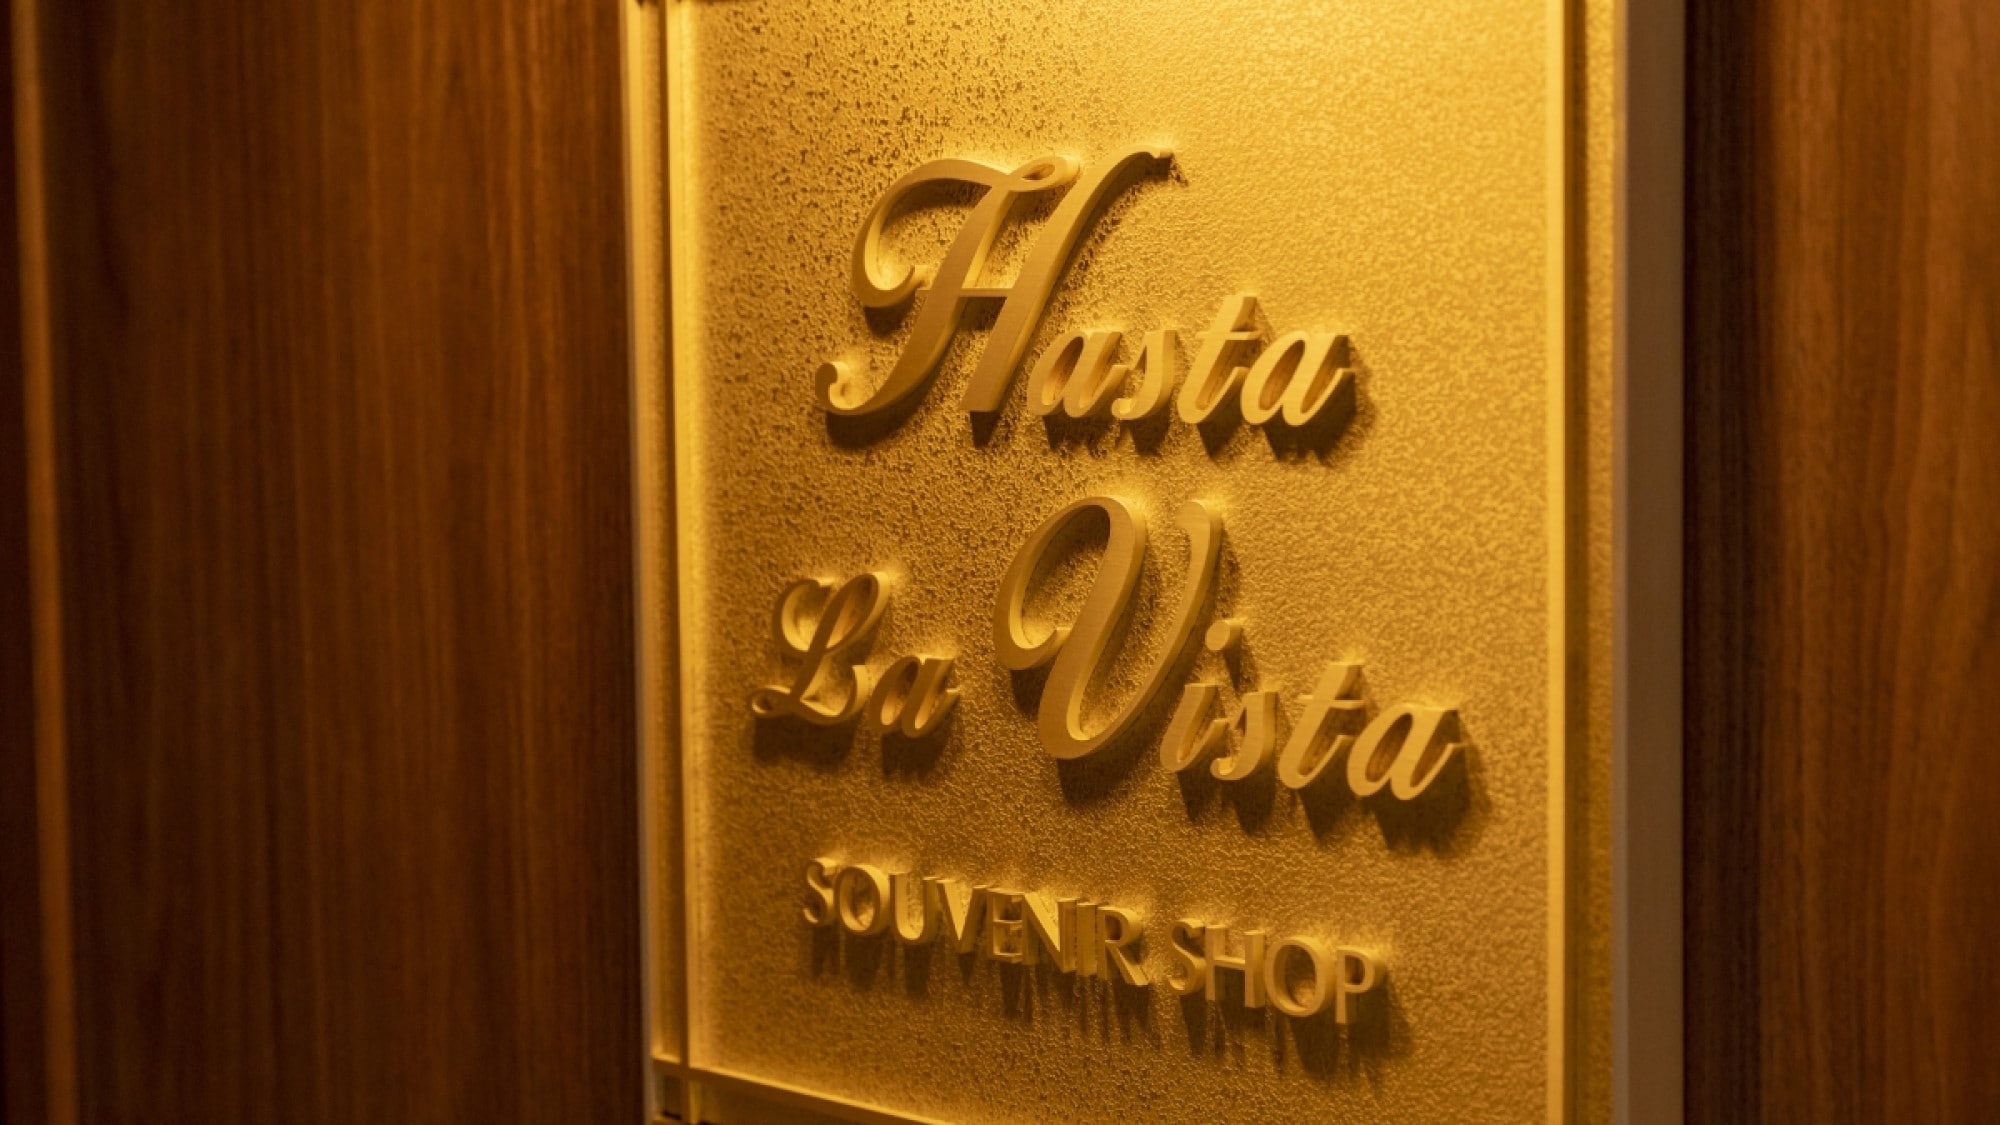 [Shop Hasta la Vista] Please feel free to visit us (open 24 hours).